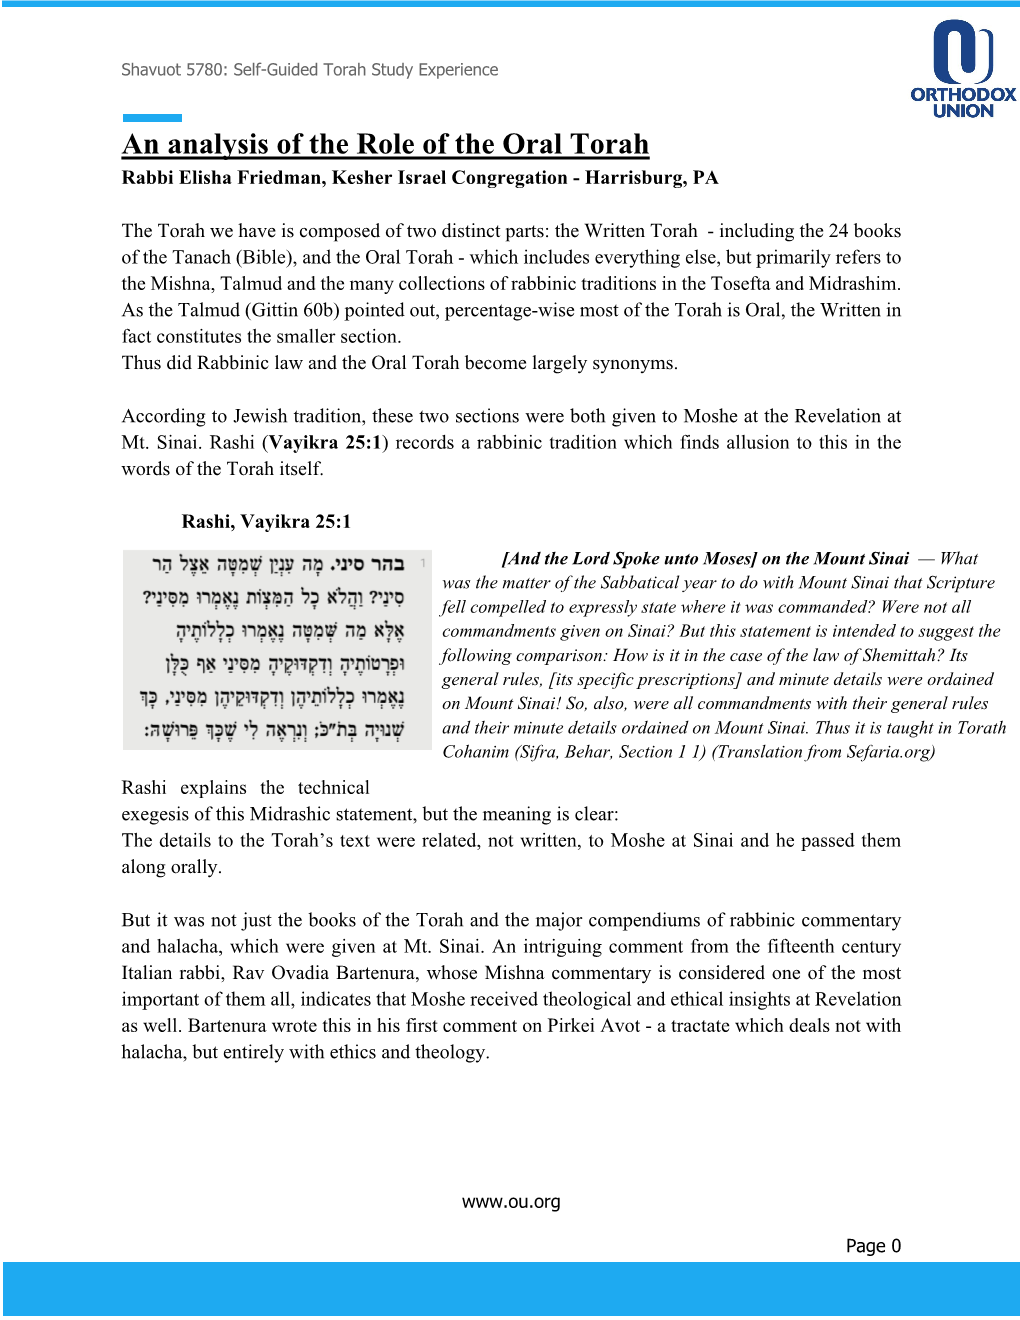 An Analysis of the Role of the Oral Torah Rabbi Elisha Friedman, Kesher Israel Congregation - Harrisburg, PA